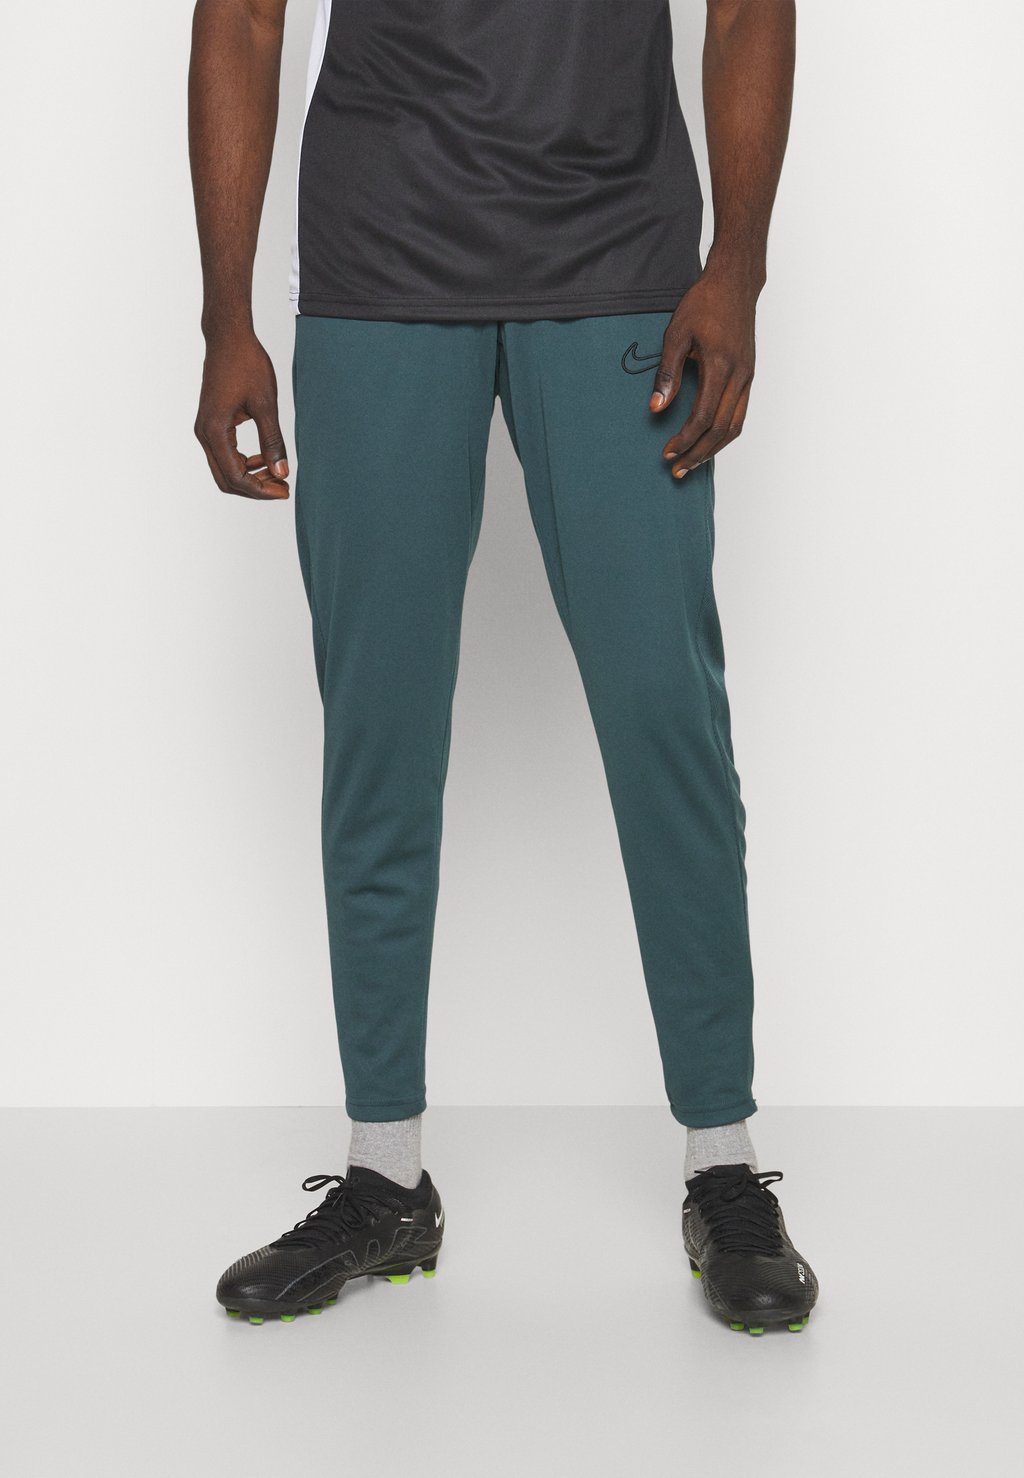 Спортивные брюки Academy 23 Pant Nike, цвет deep jungle/black спортивные брюки pant taper nike цвет deep jungle black